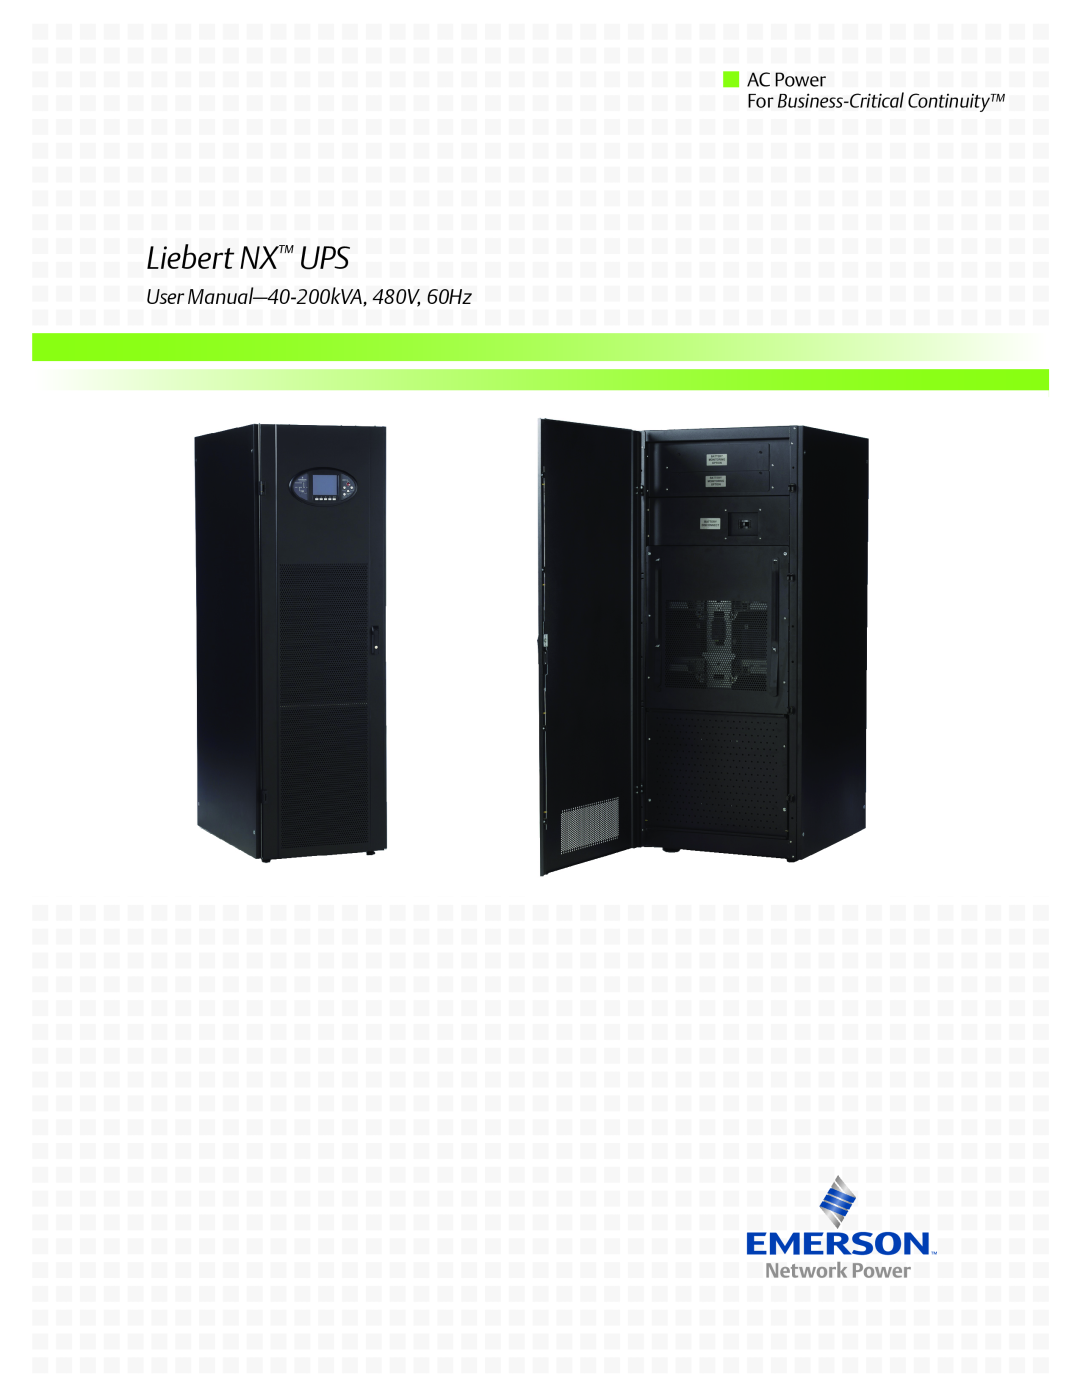 Emerson 60HZ user manual Liebert NX UPS, User Manual–40-200kVA, 480V,60Hz, AC Power, For Business-CriticalContinuity 